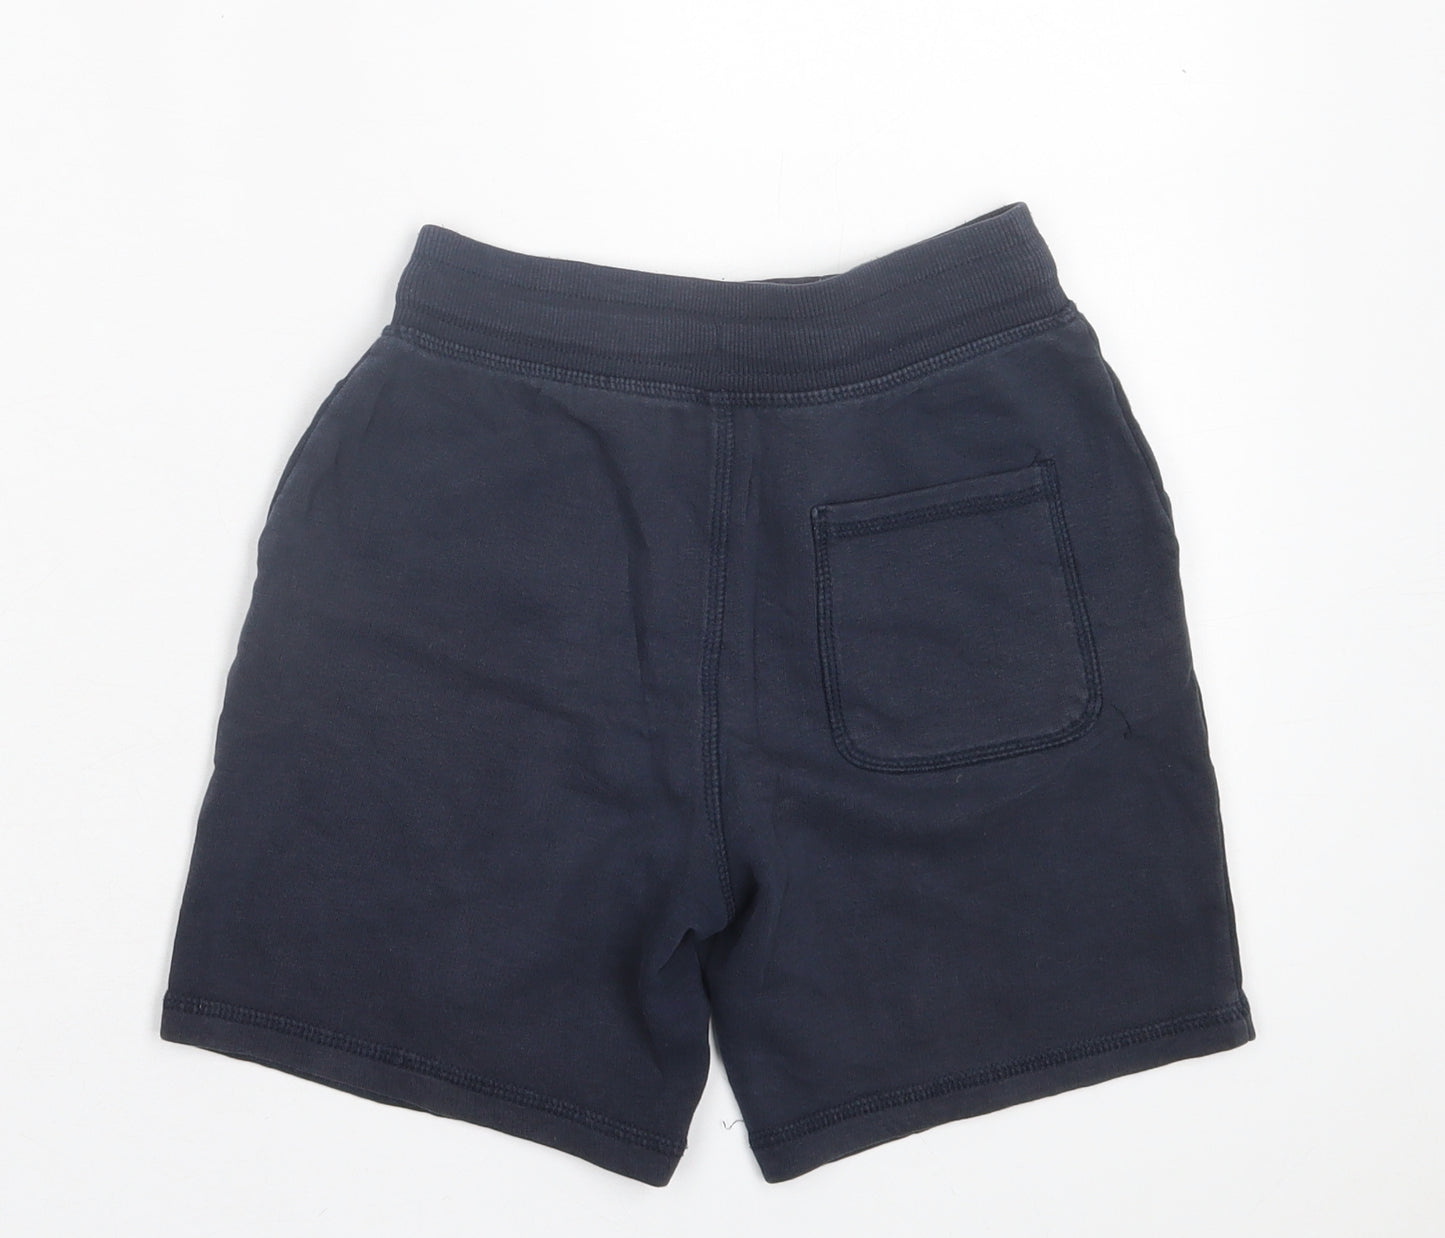 George Boys Blue Cotton Sweat Shorts Size 7-8 Years Regular Drawstring